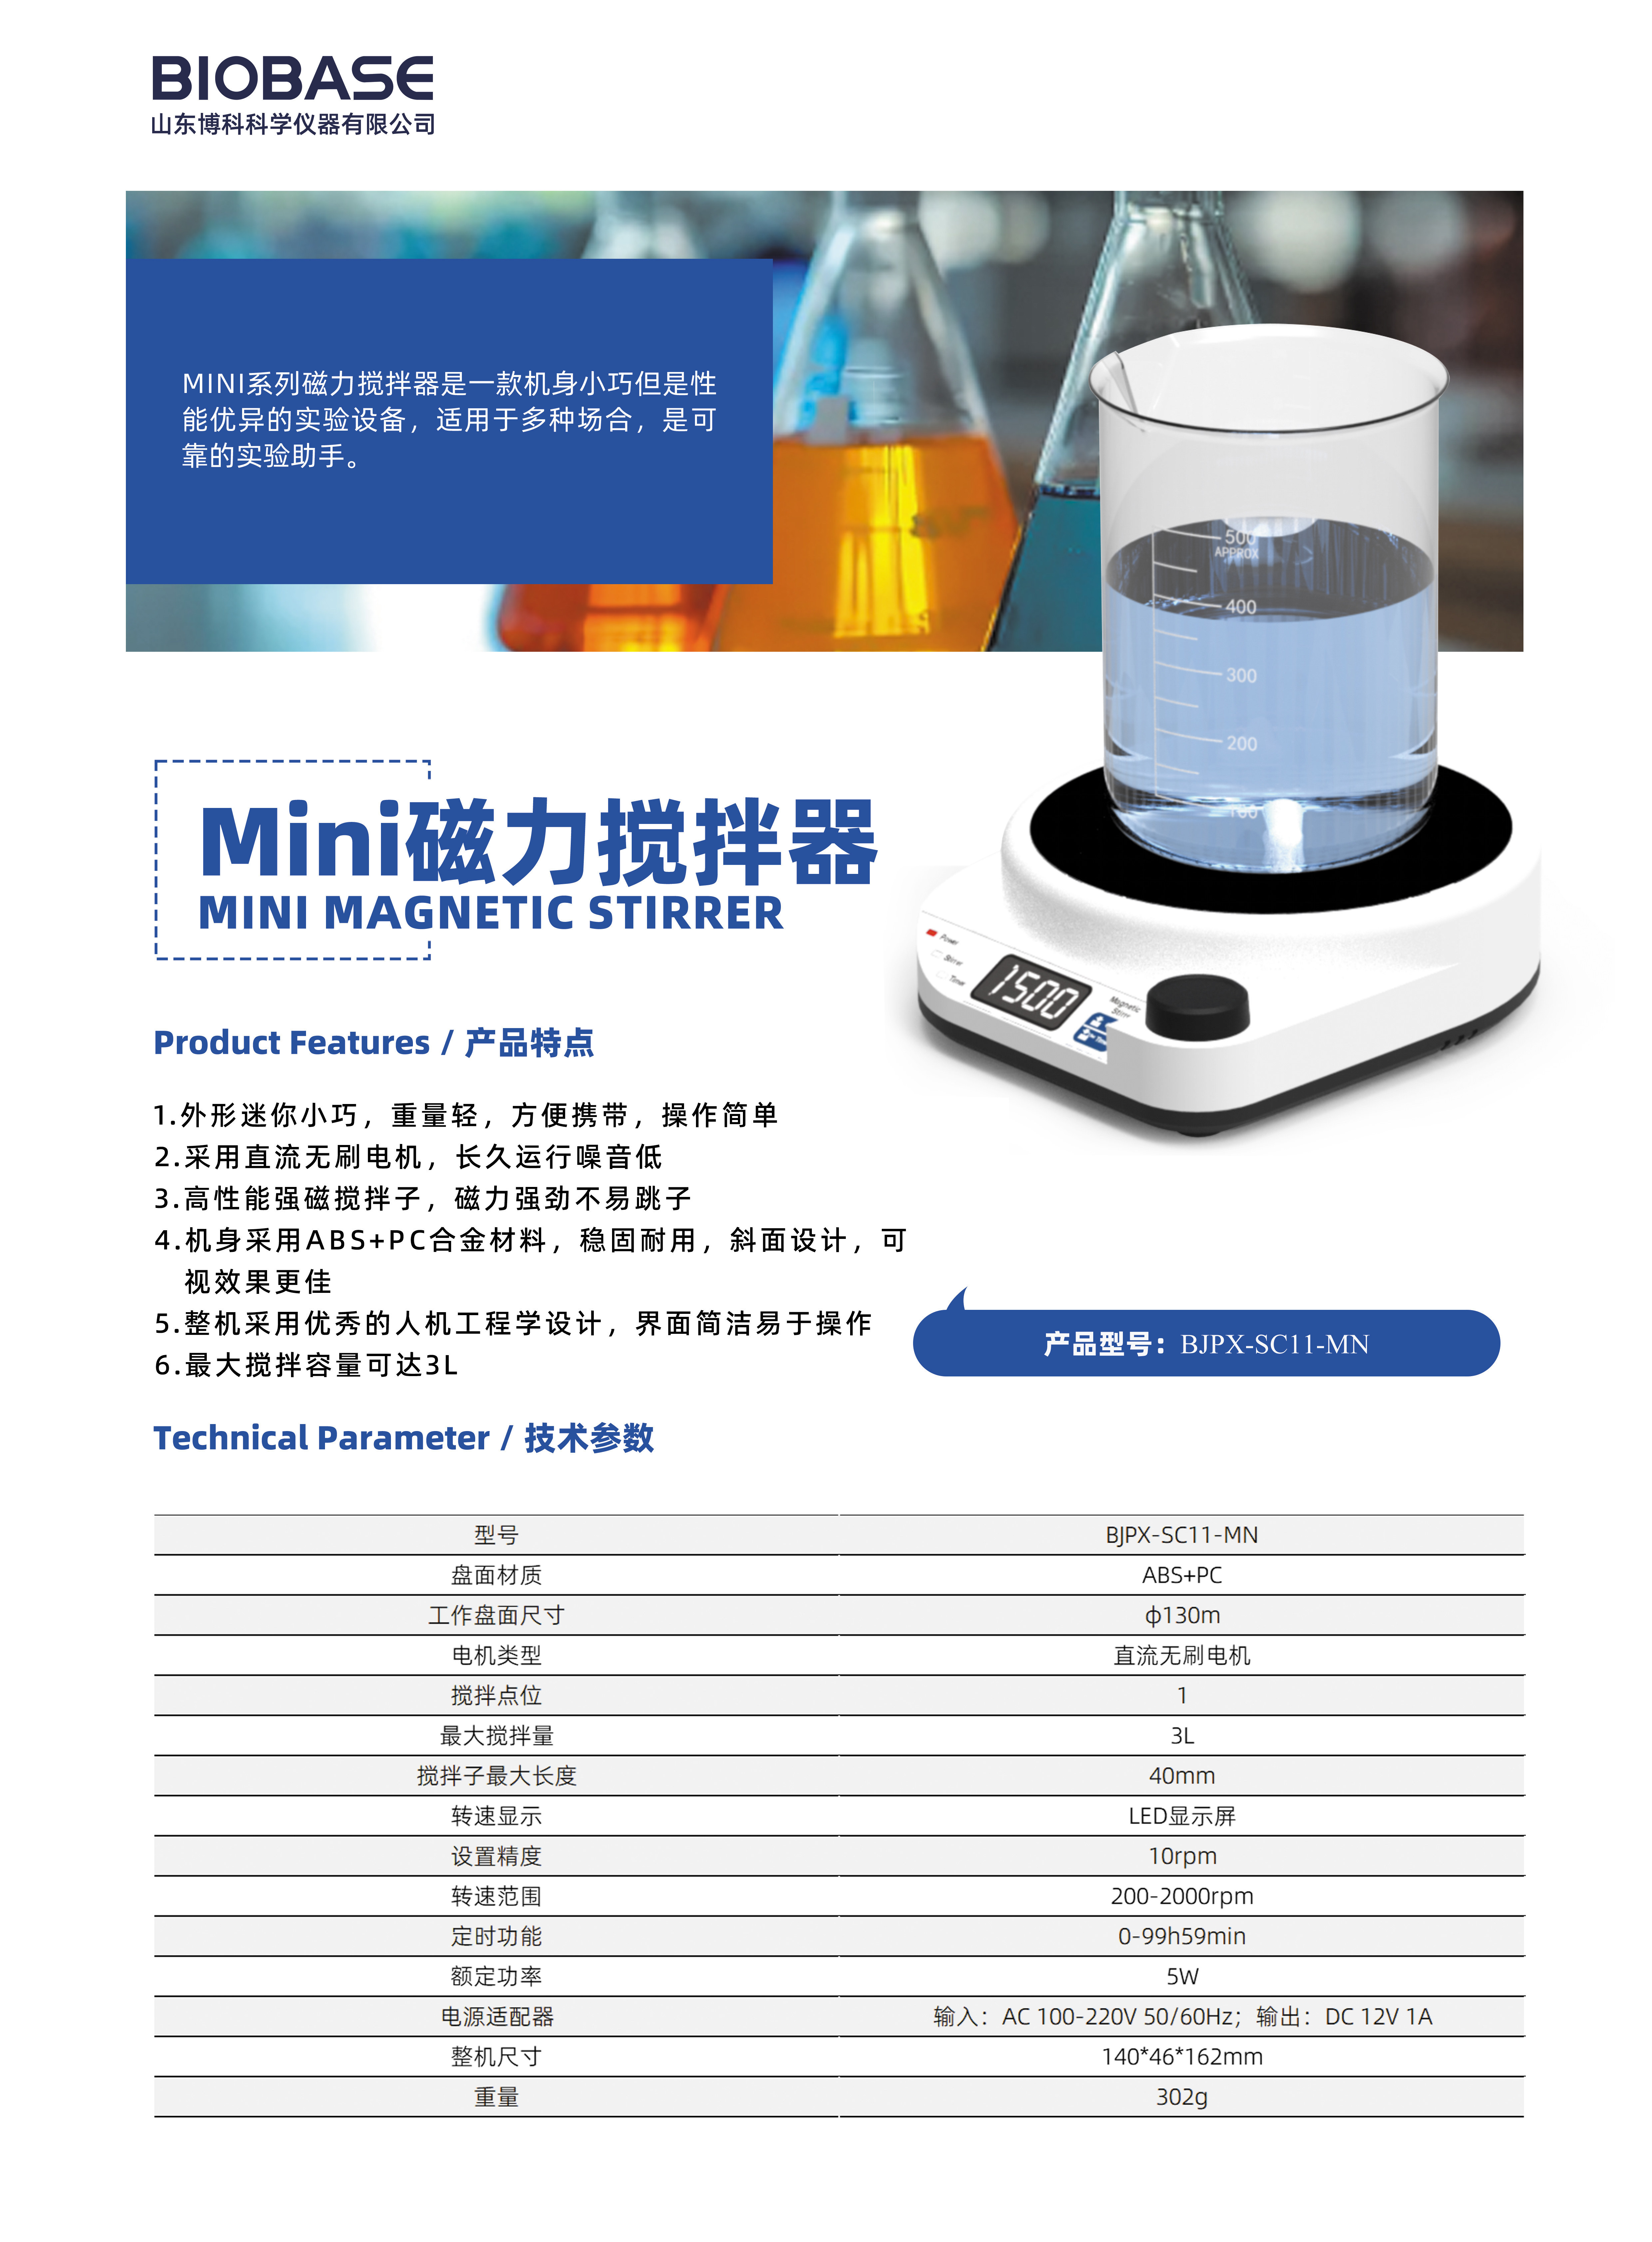 Mini磁力搅拌器BJPX-SC11-MN彩页202404031521214422.jpg